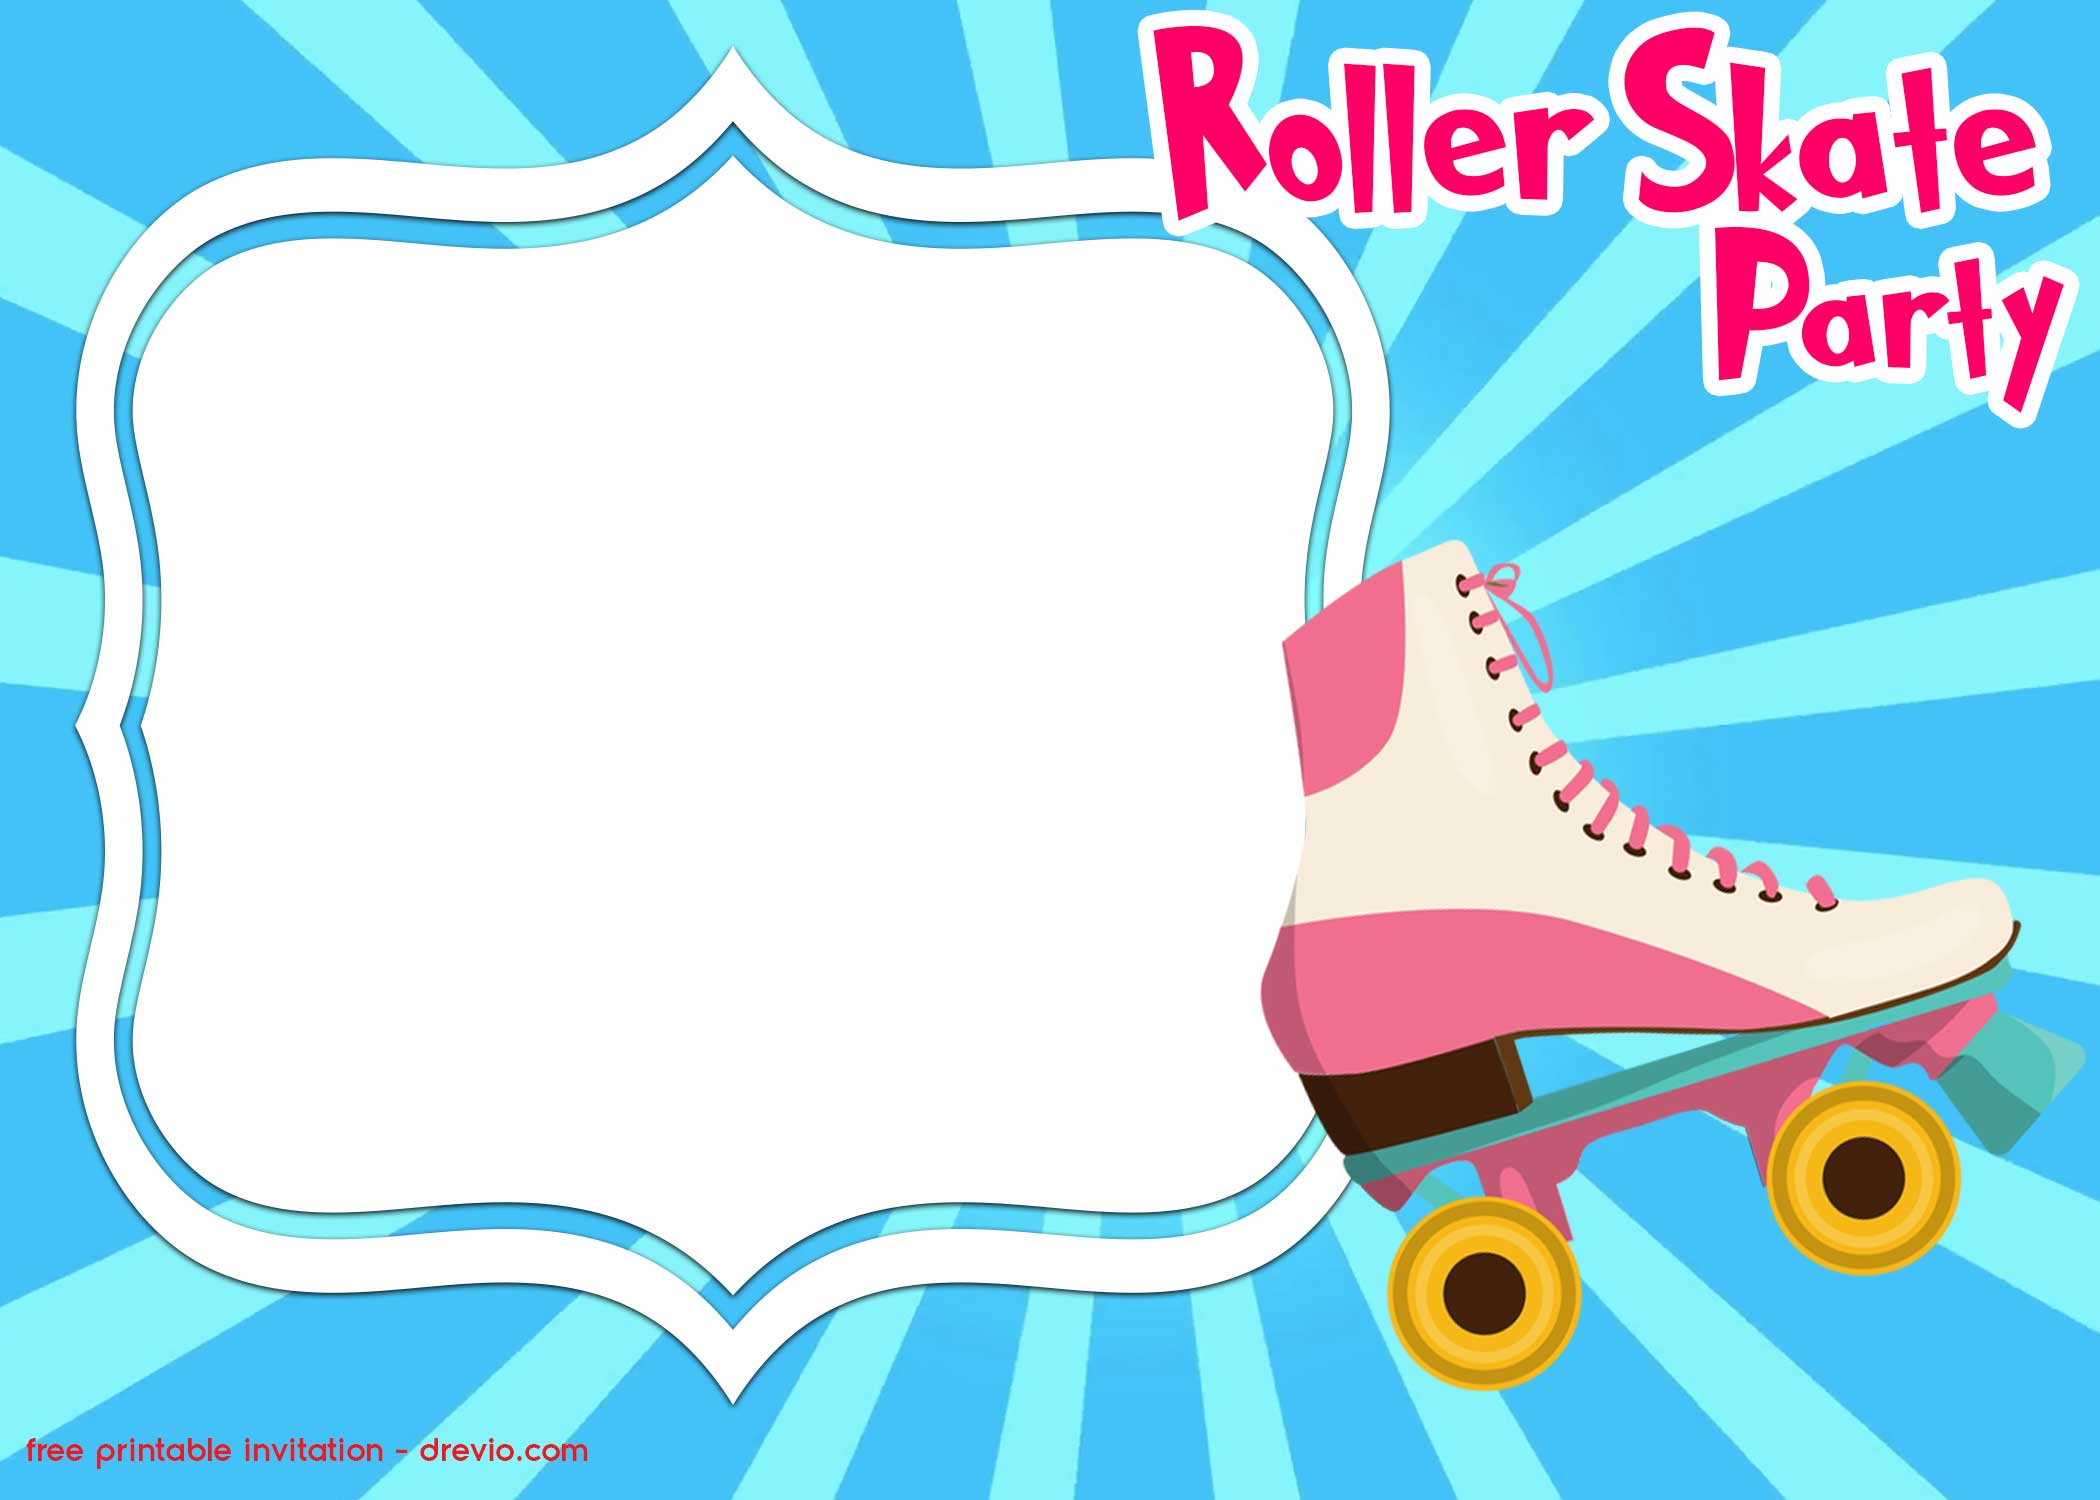 edit-now-roller-skate-birthday-invitation-pink-joint-roller-skating